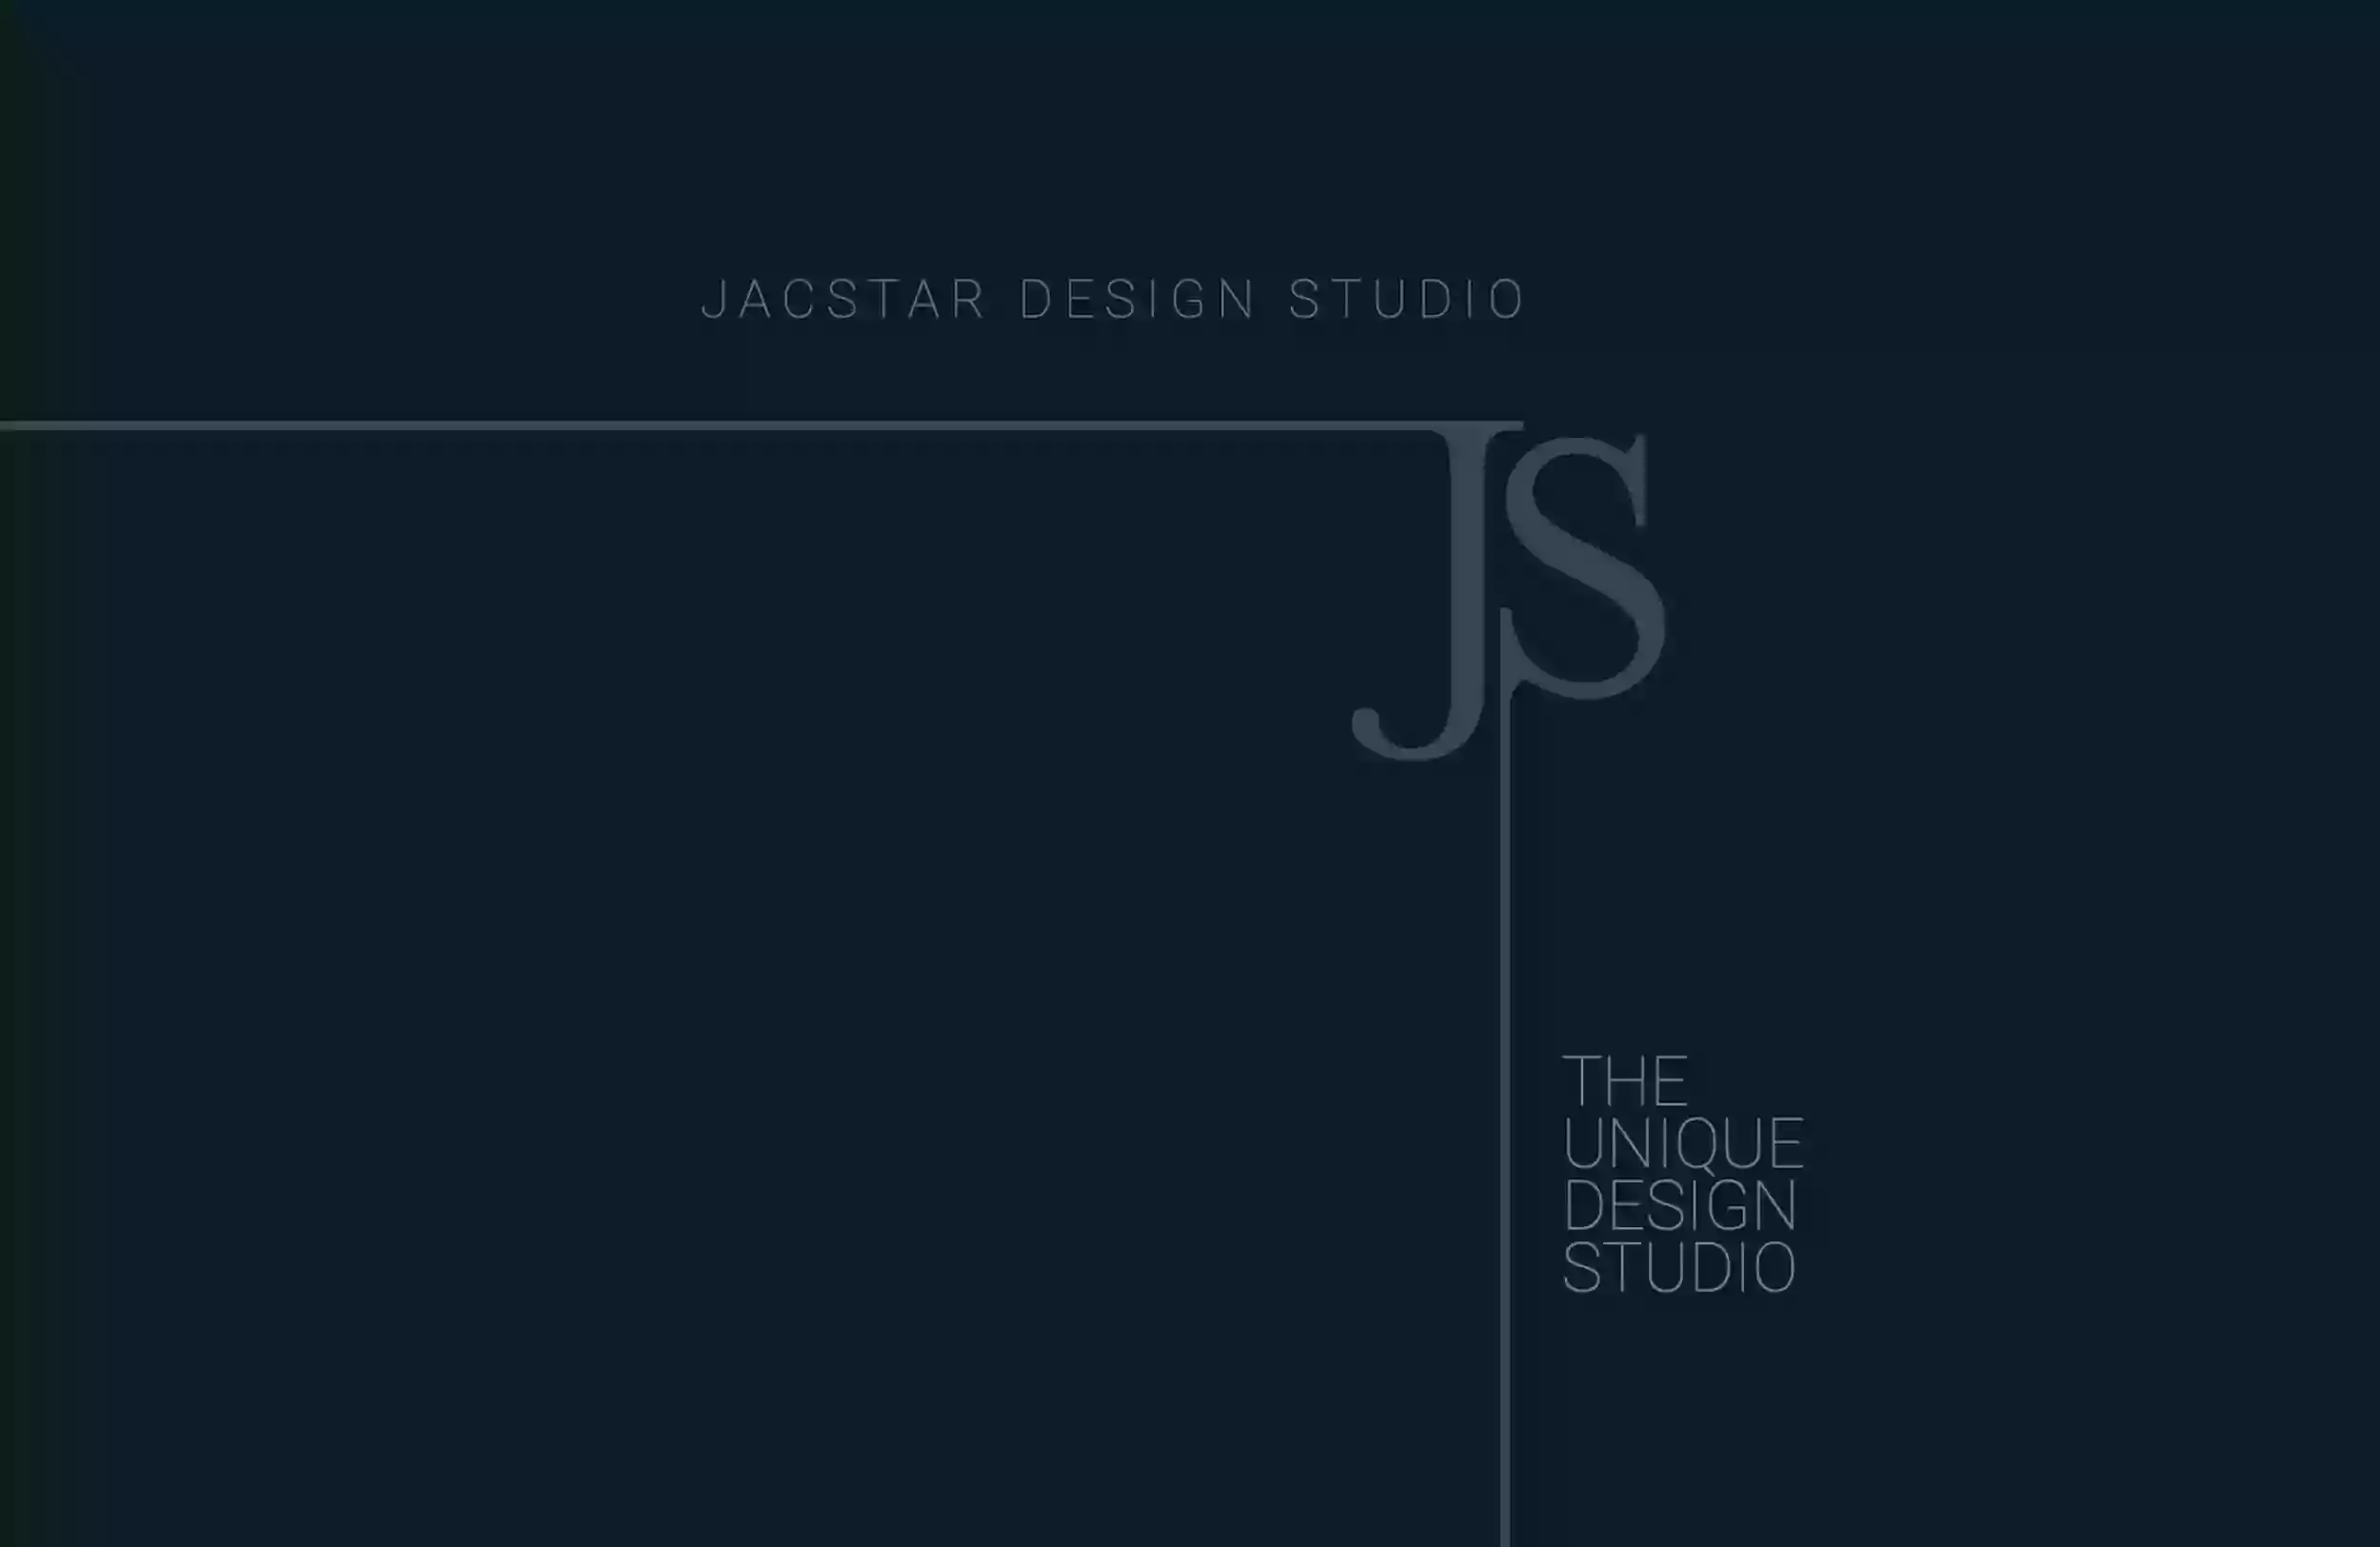 Jacstar Design Studio